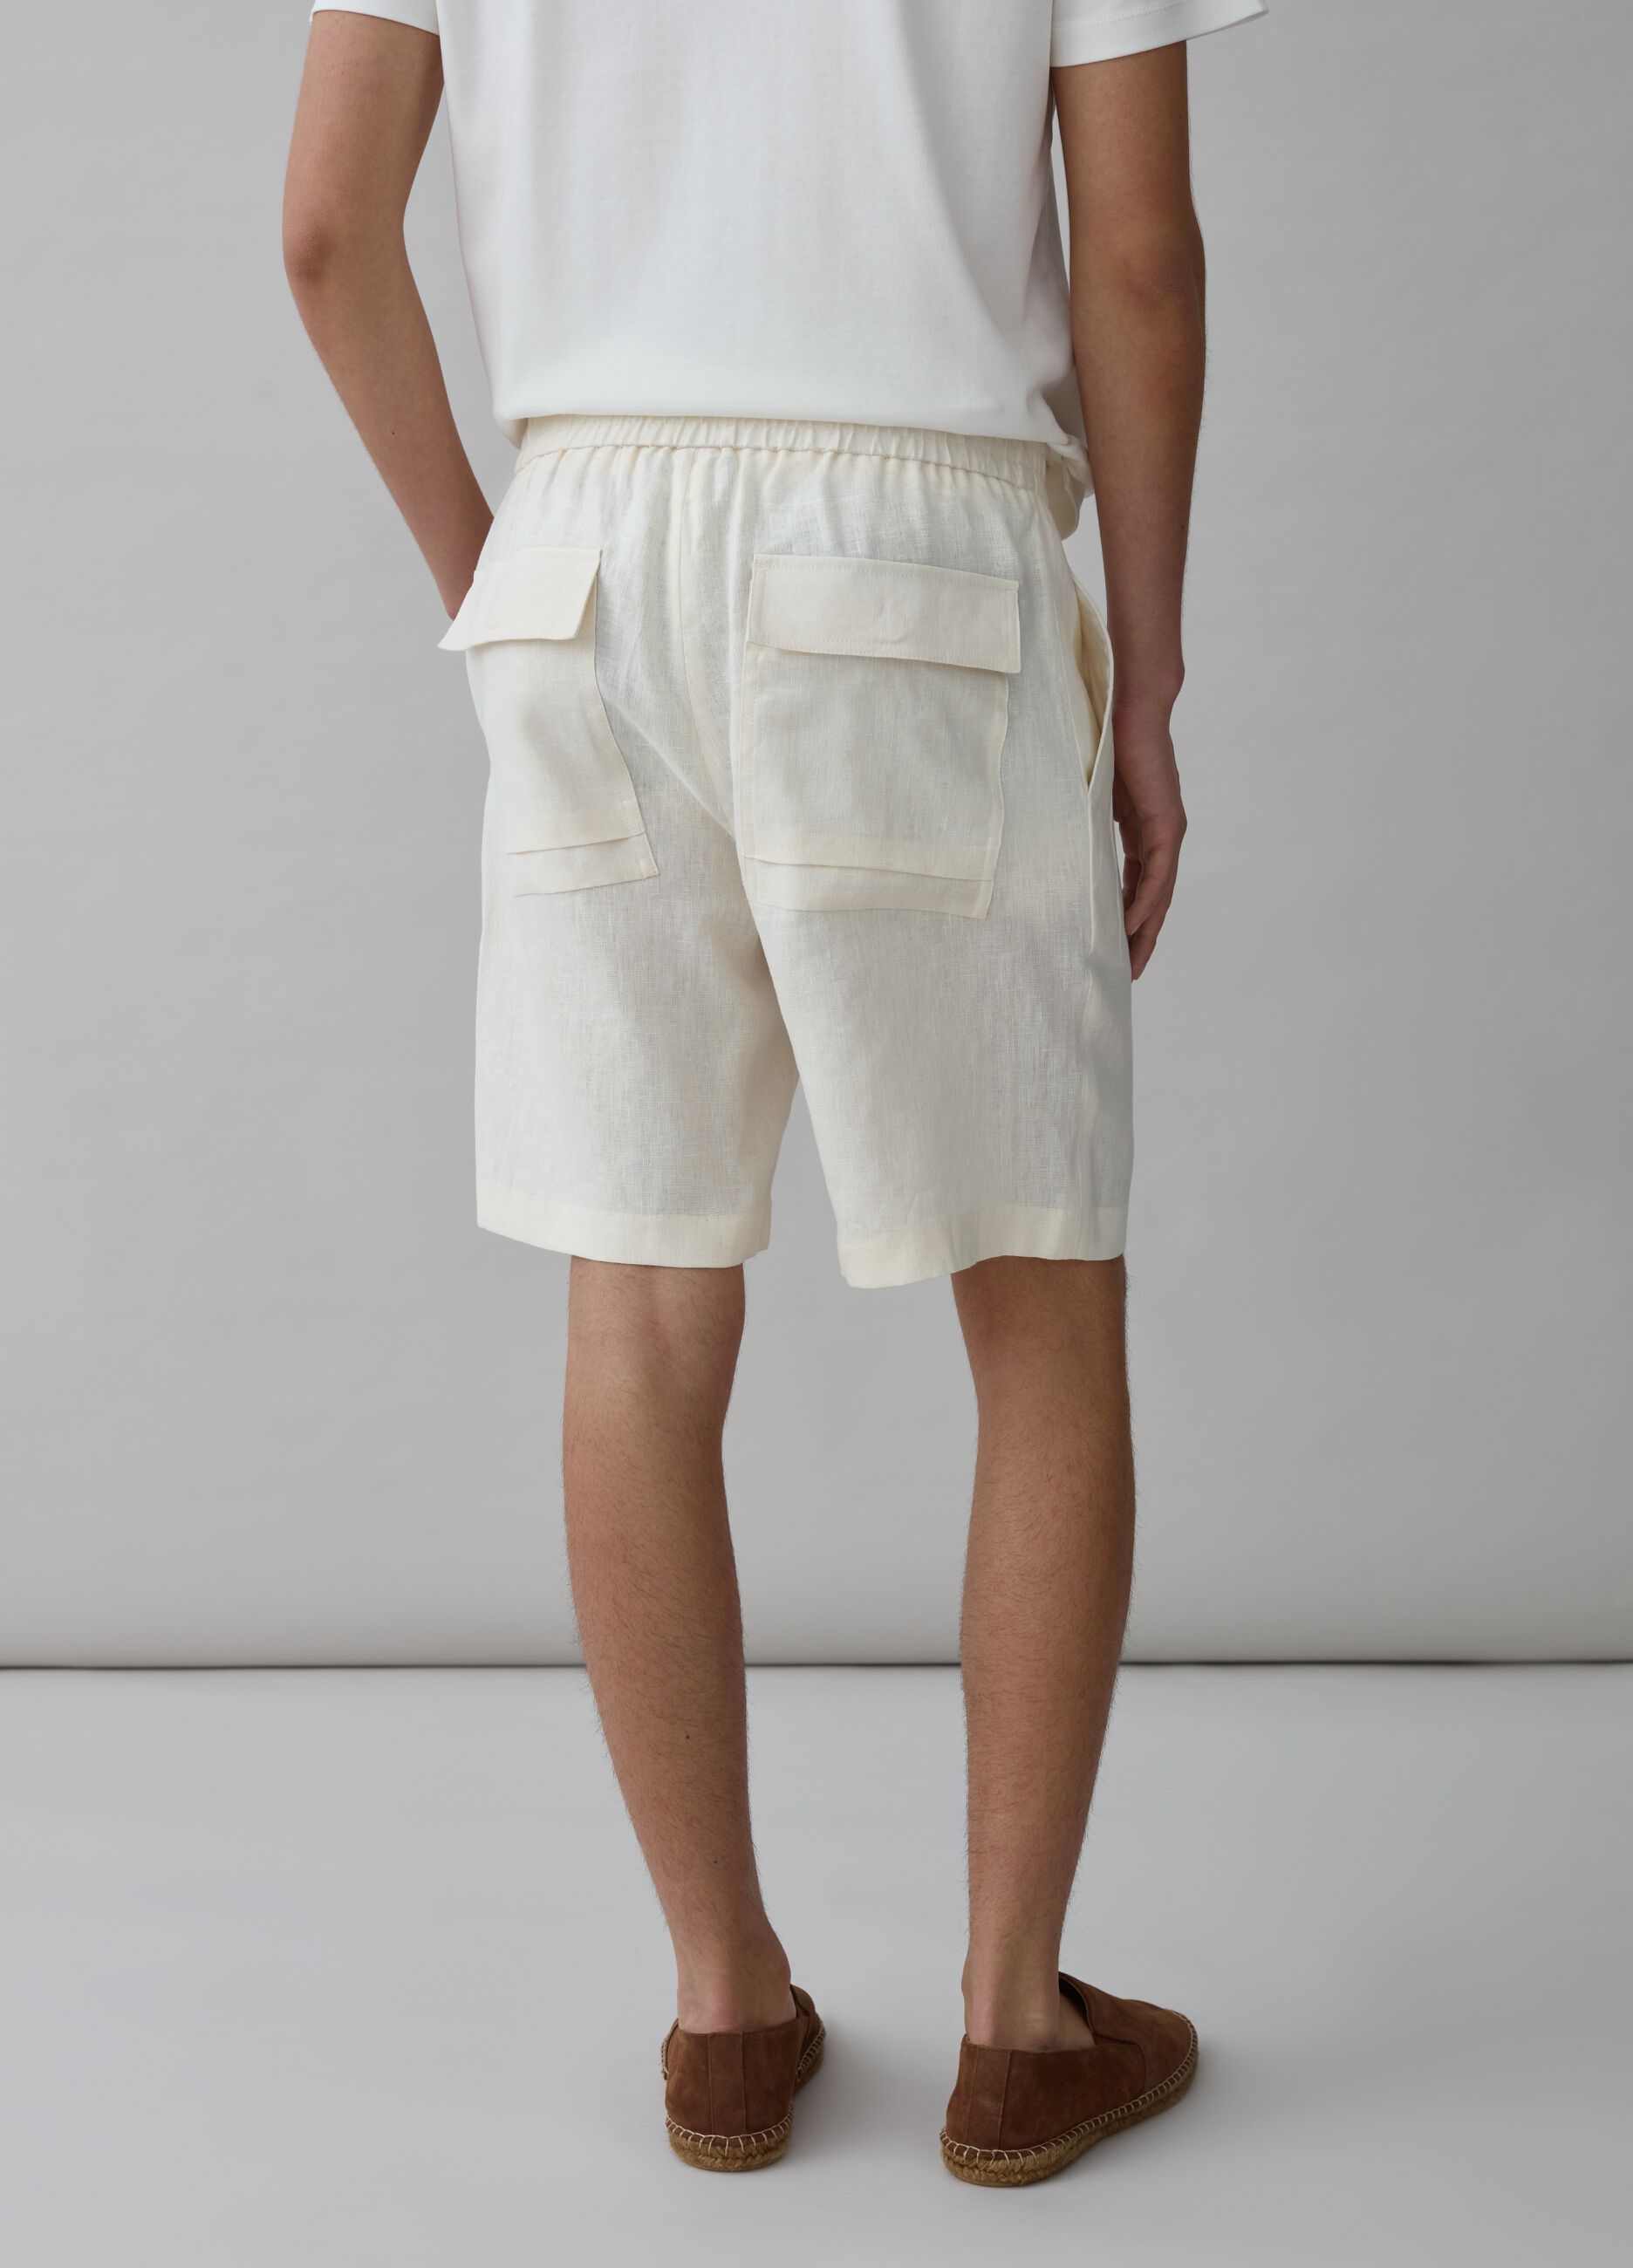 Contemporary Bermuda shorts in linen